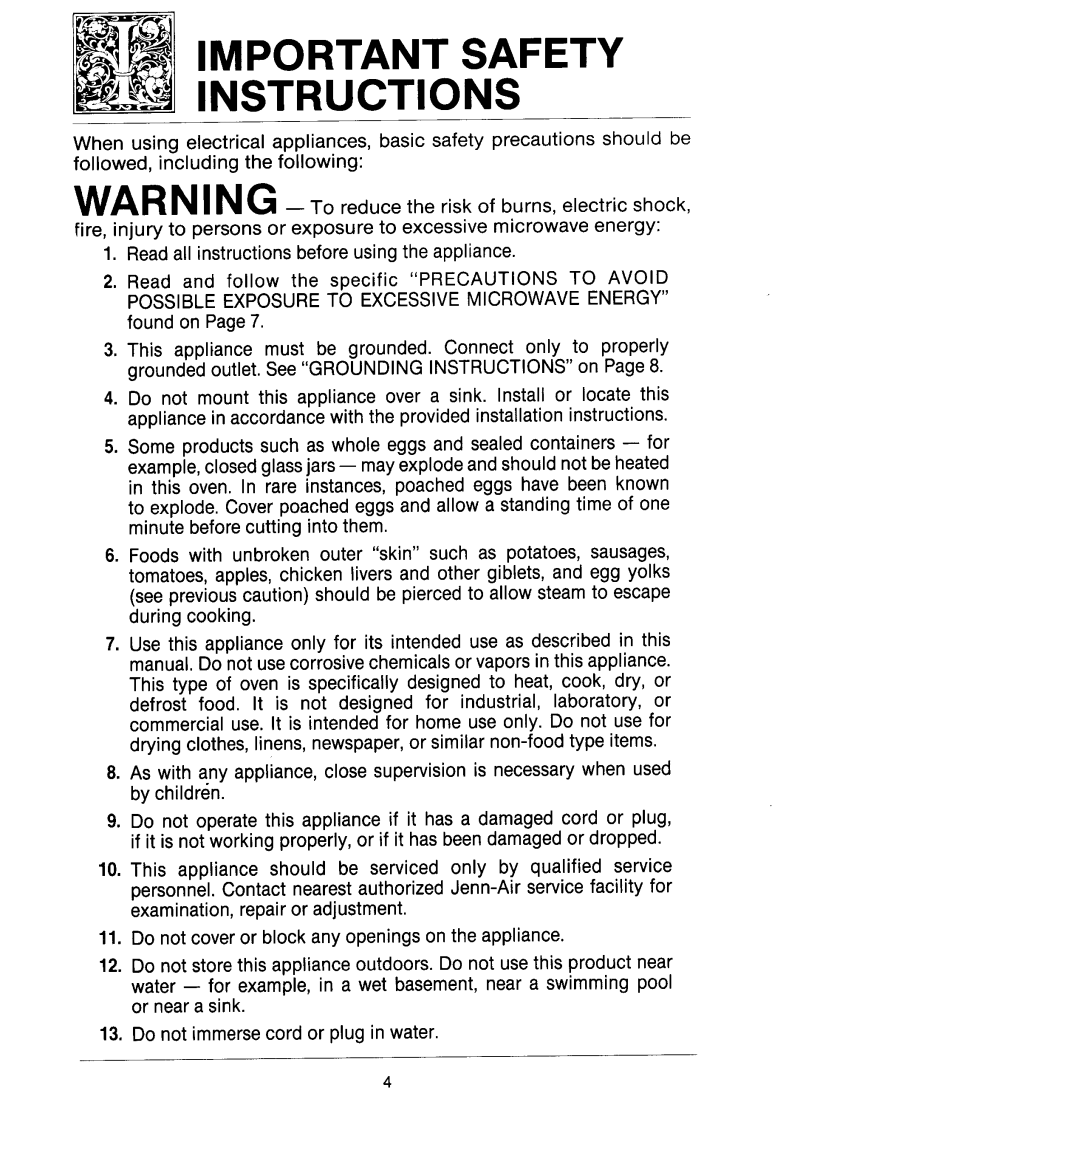 Jenn-Air M418, M438 manual Instructionsimportant Safety 